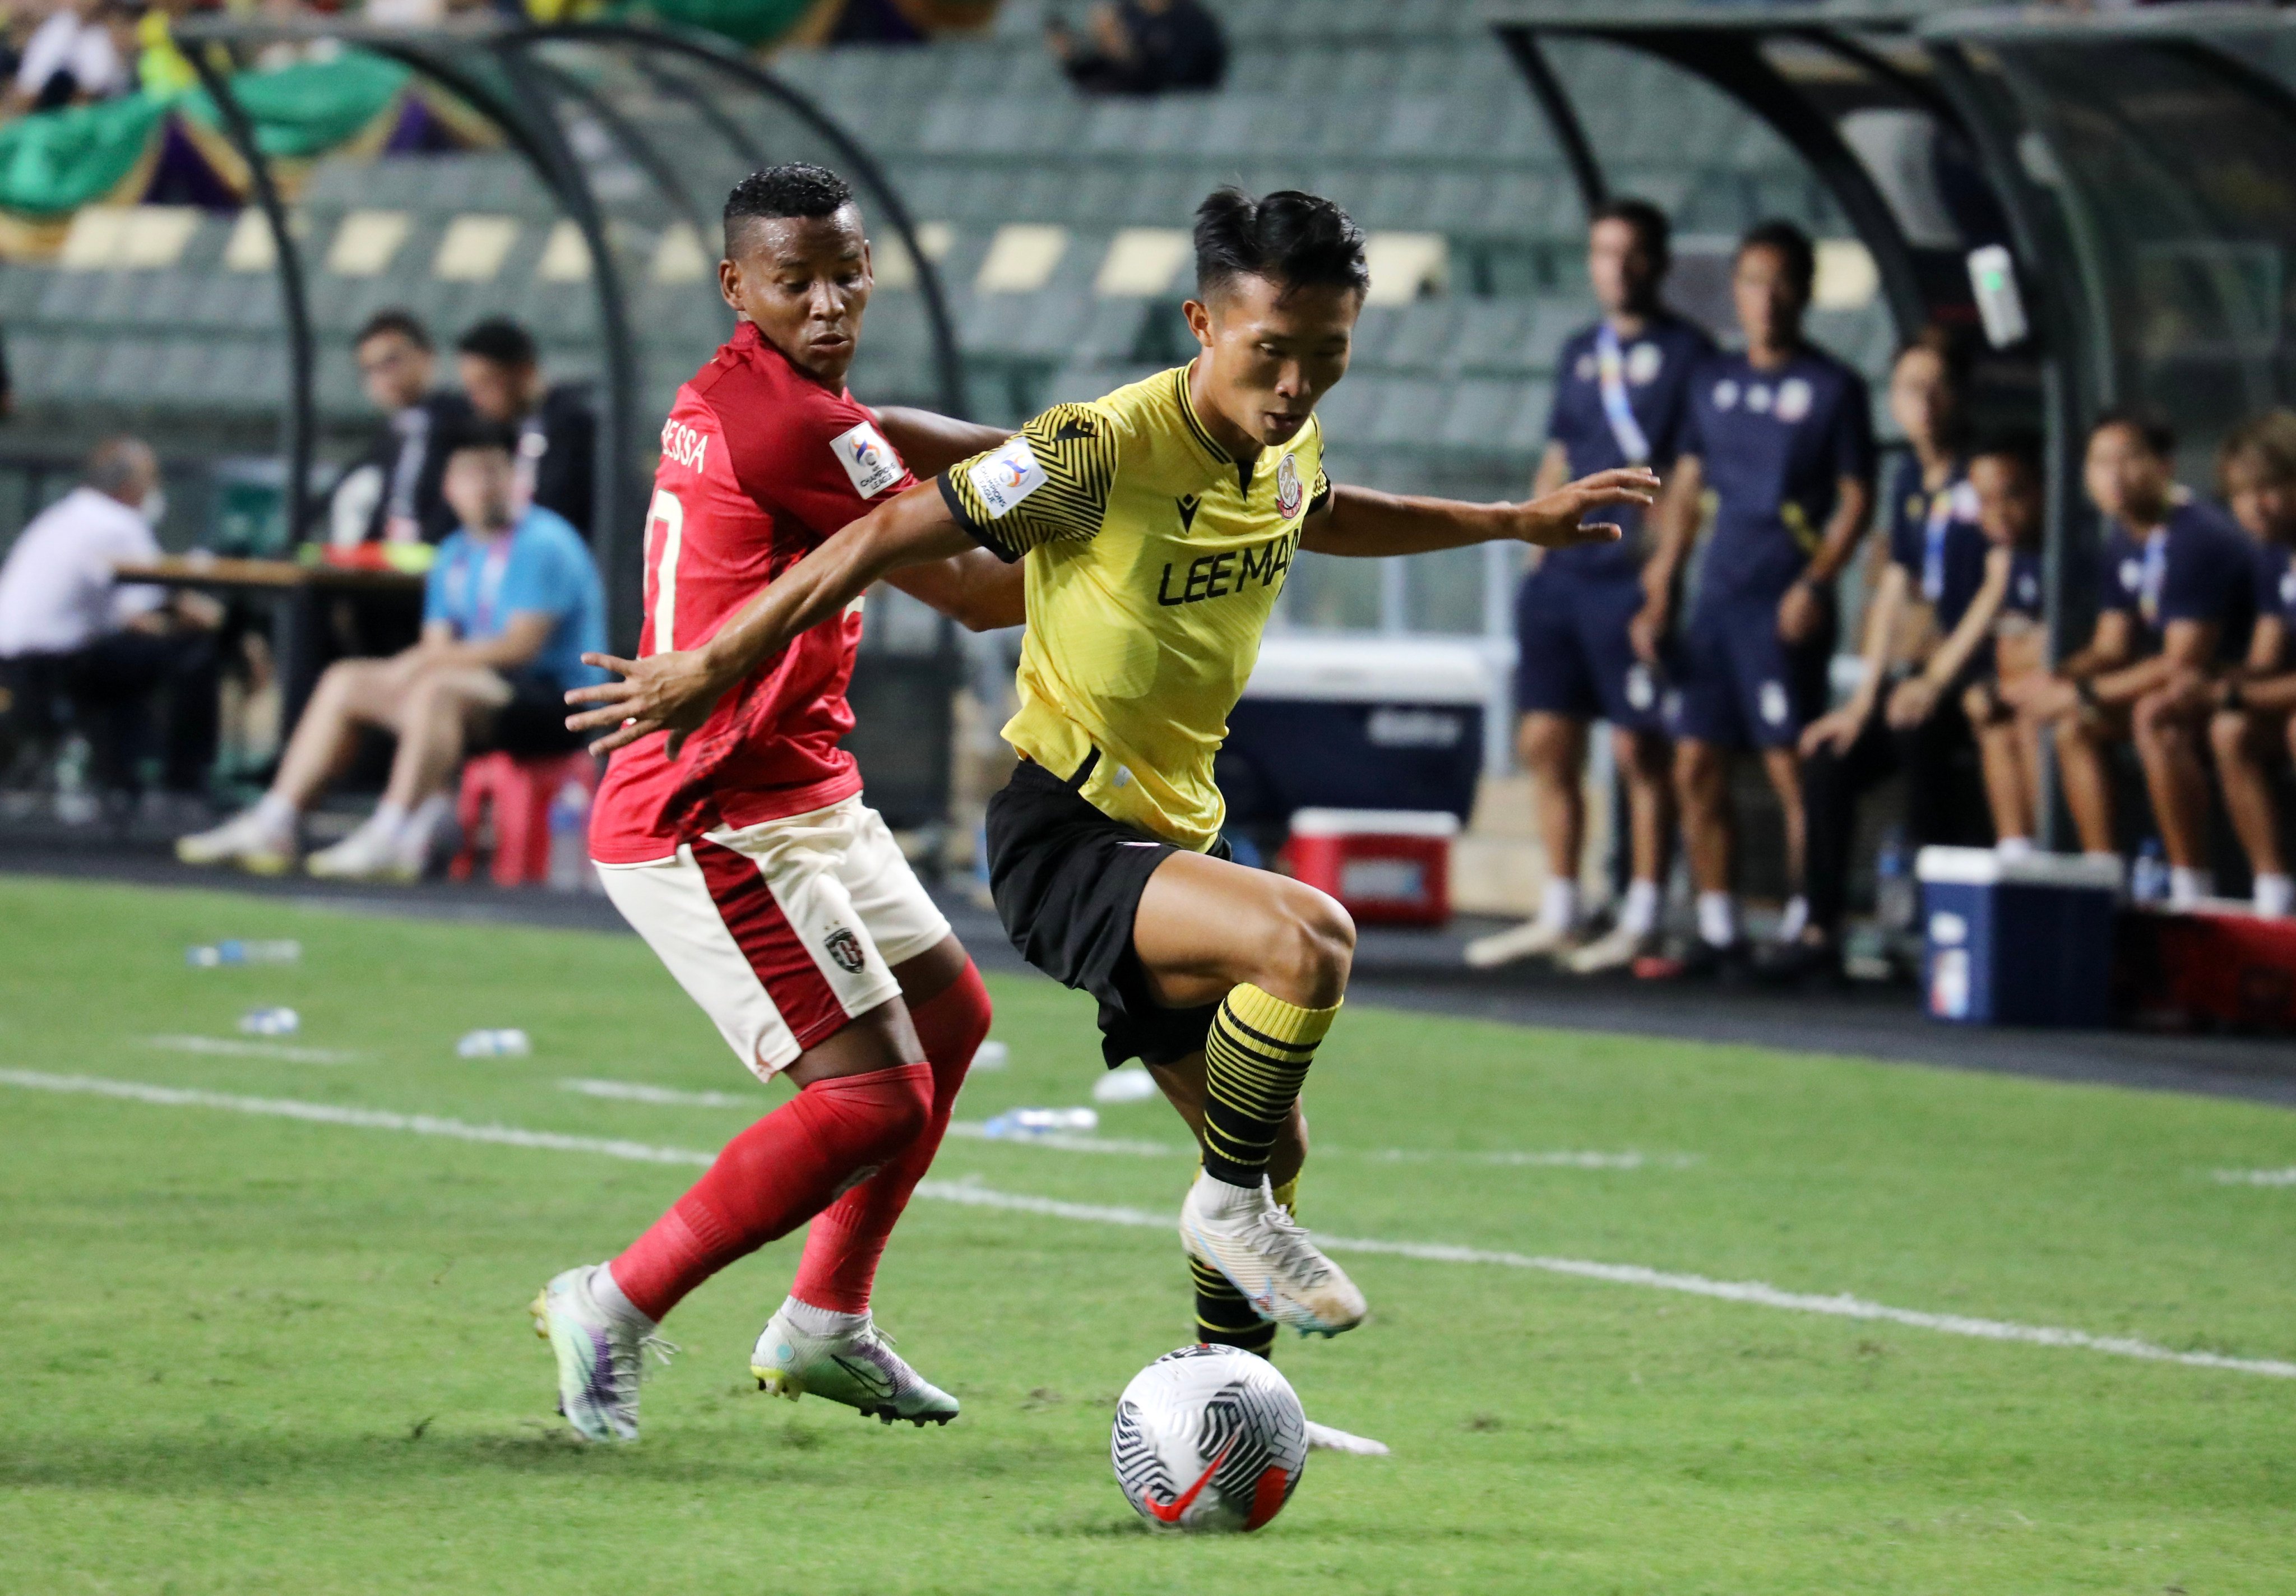 Lee Man subjected Bali United to a 5-1 thrashing at Hong Kong Stadium. Photo: Xiaomei Chen